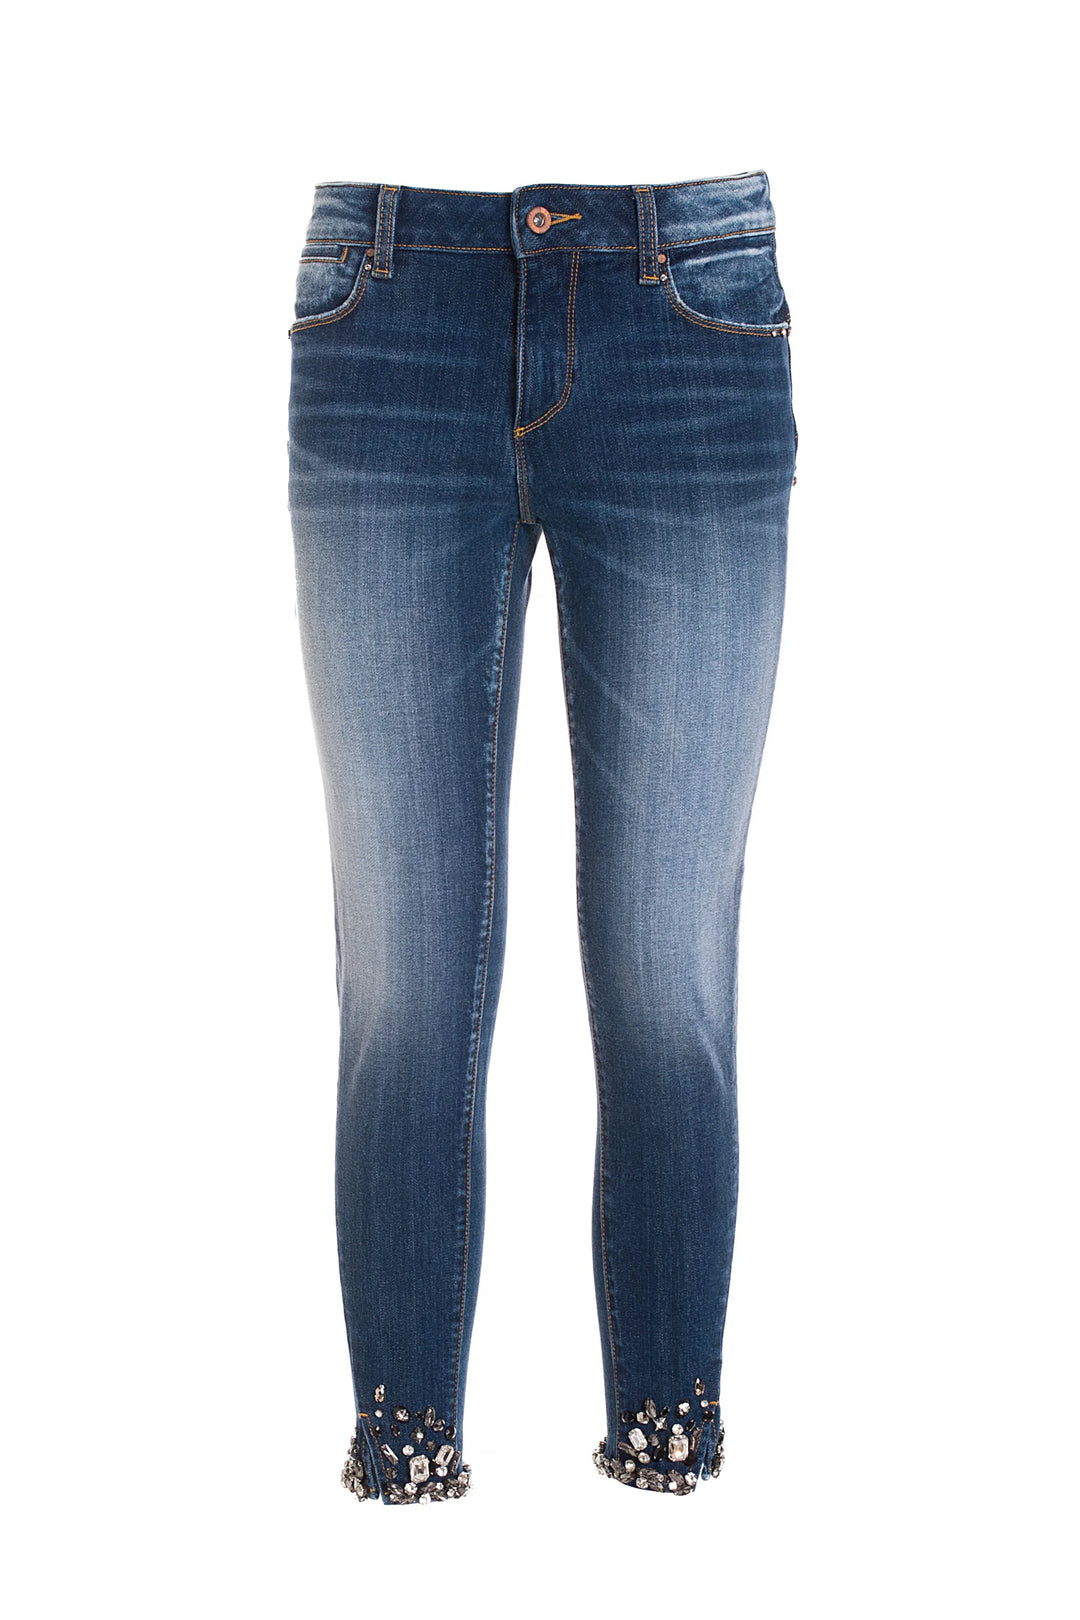 FRACOMINA Jeans slim effetto shape up in denim con lavaggio strong - Mancinelli 1954